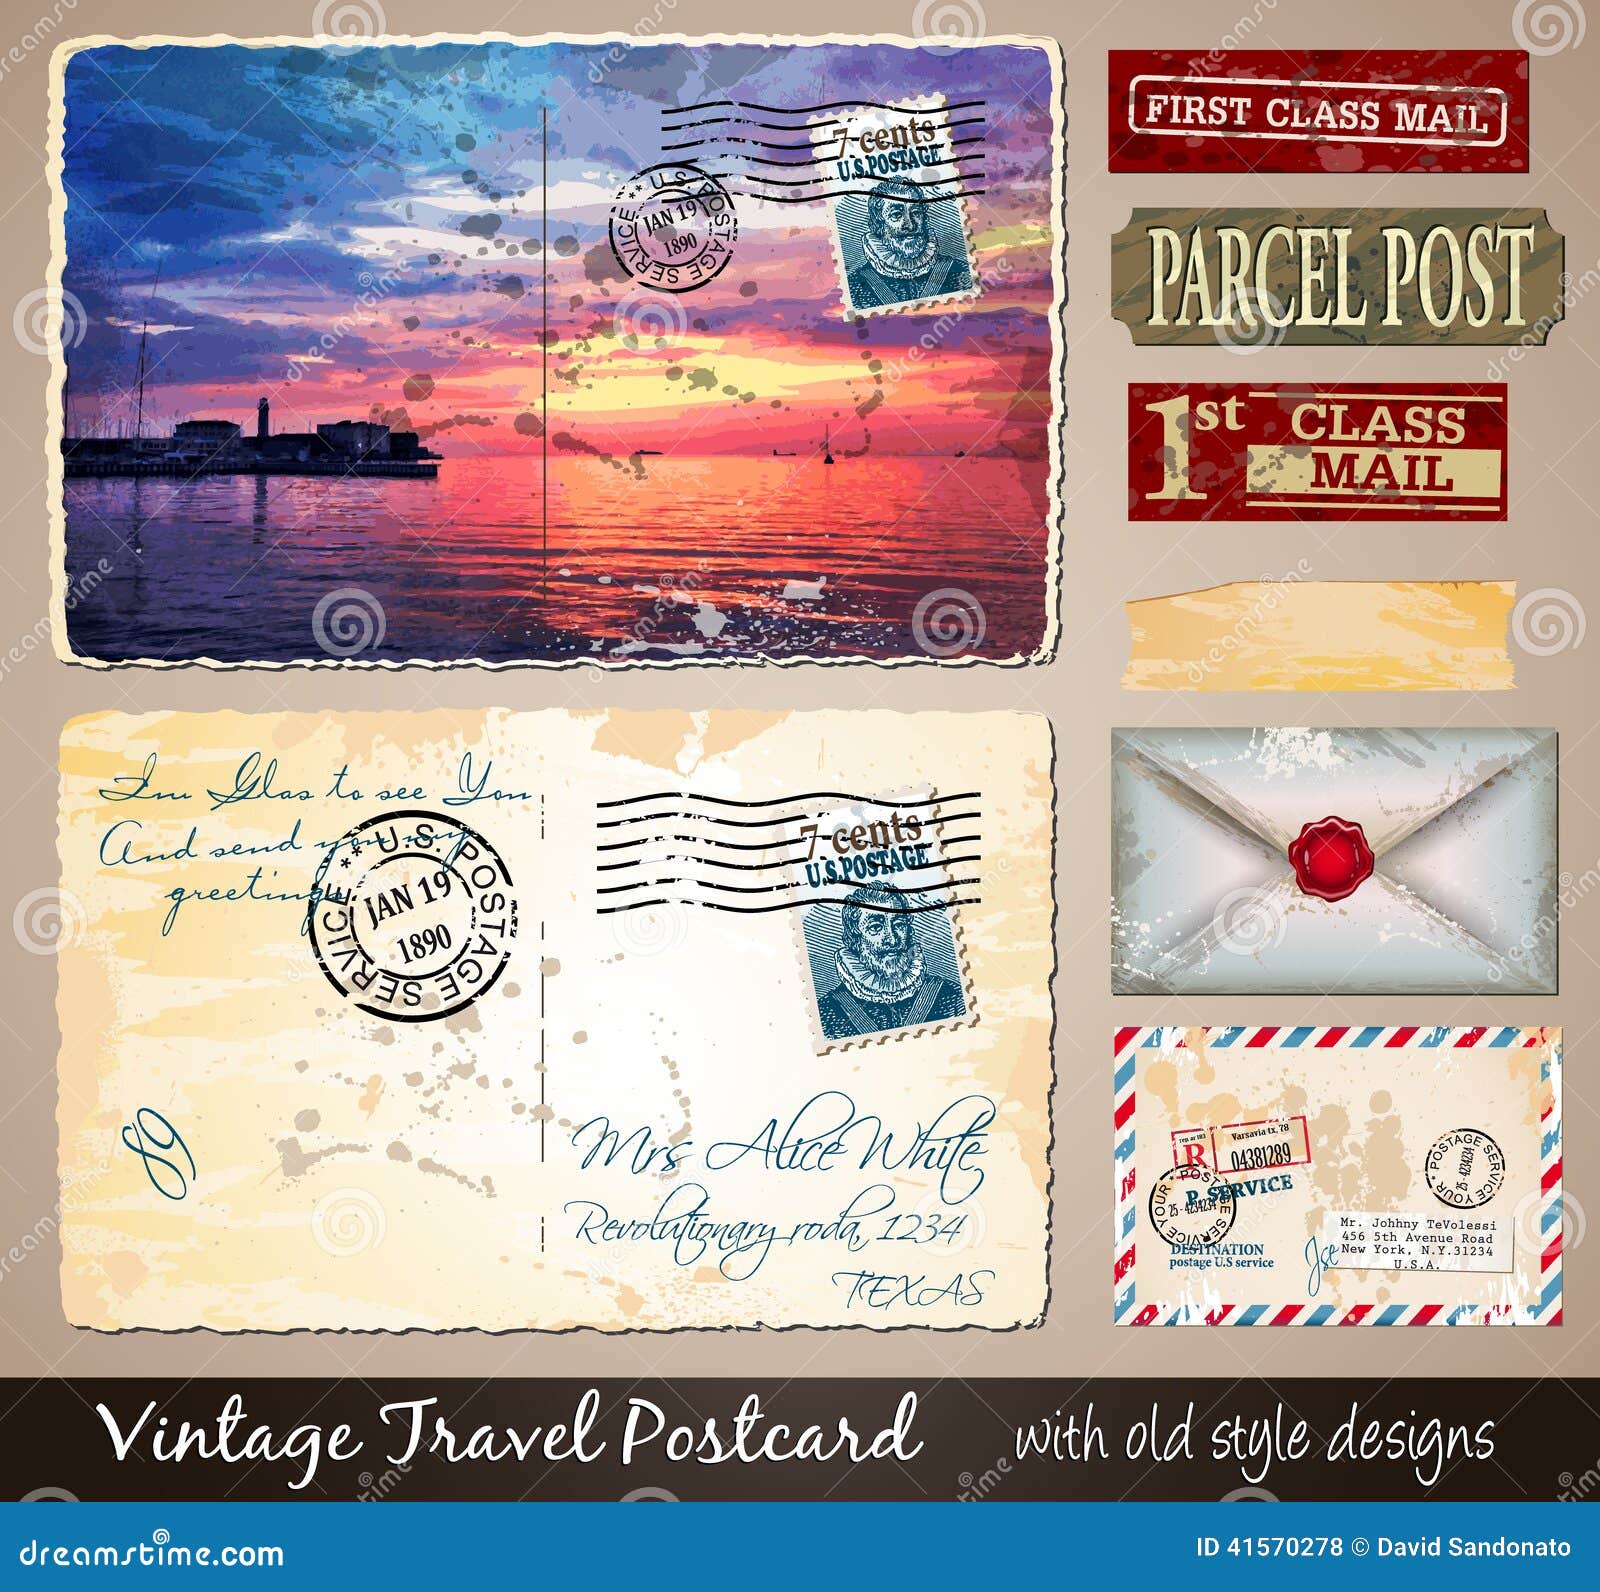 32pcs Postales de Viaje Vintage Tarjetas Postales Antigua de Atracciones de Fama Mundial